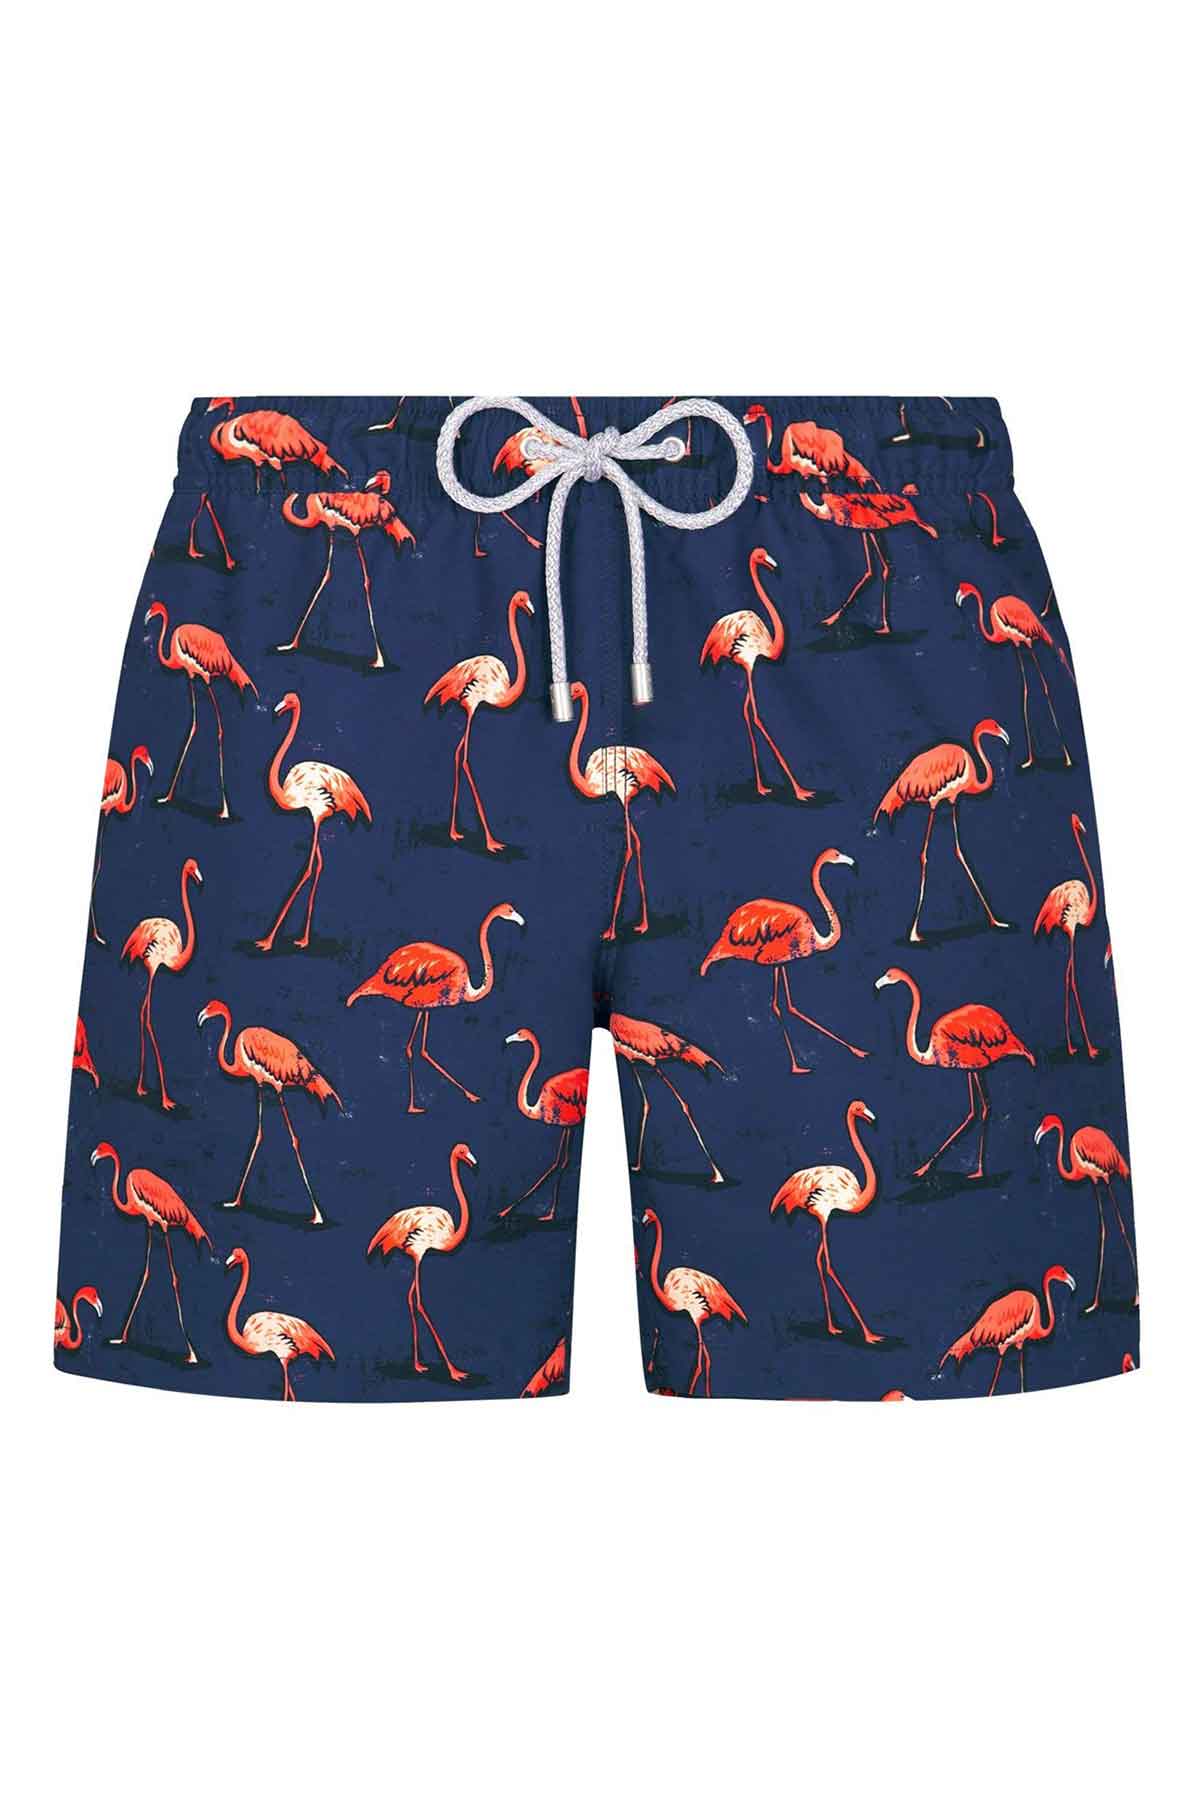 Bluemint Arthus Stretch Midnight Flamingo Şort Mayo-Libas Trendy Fashion Store